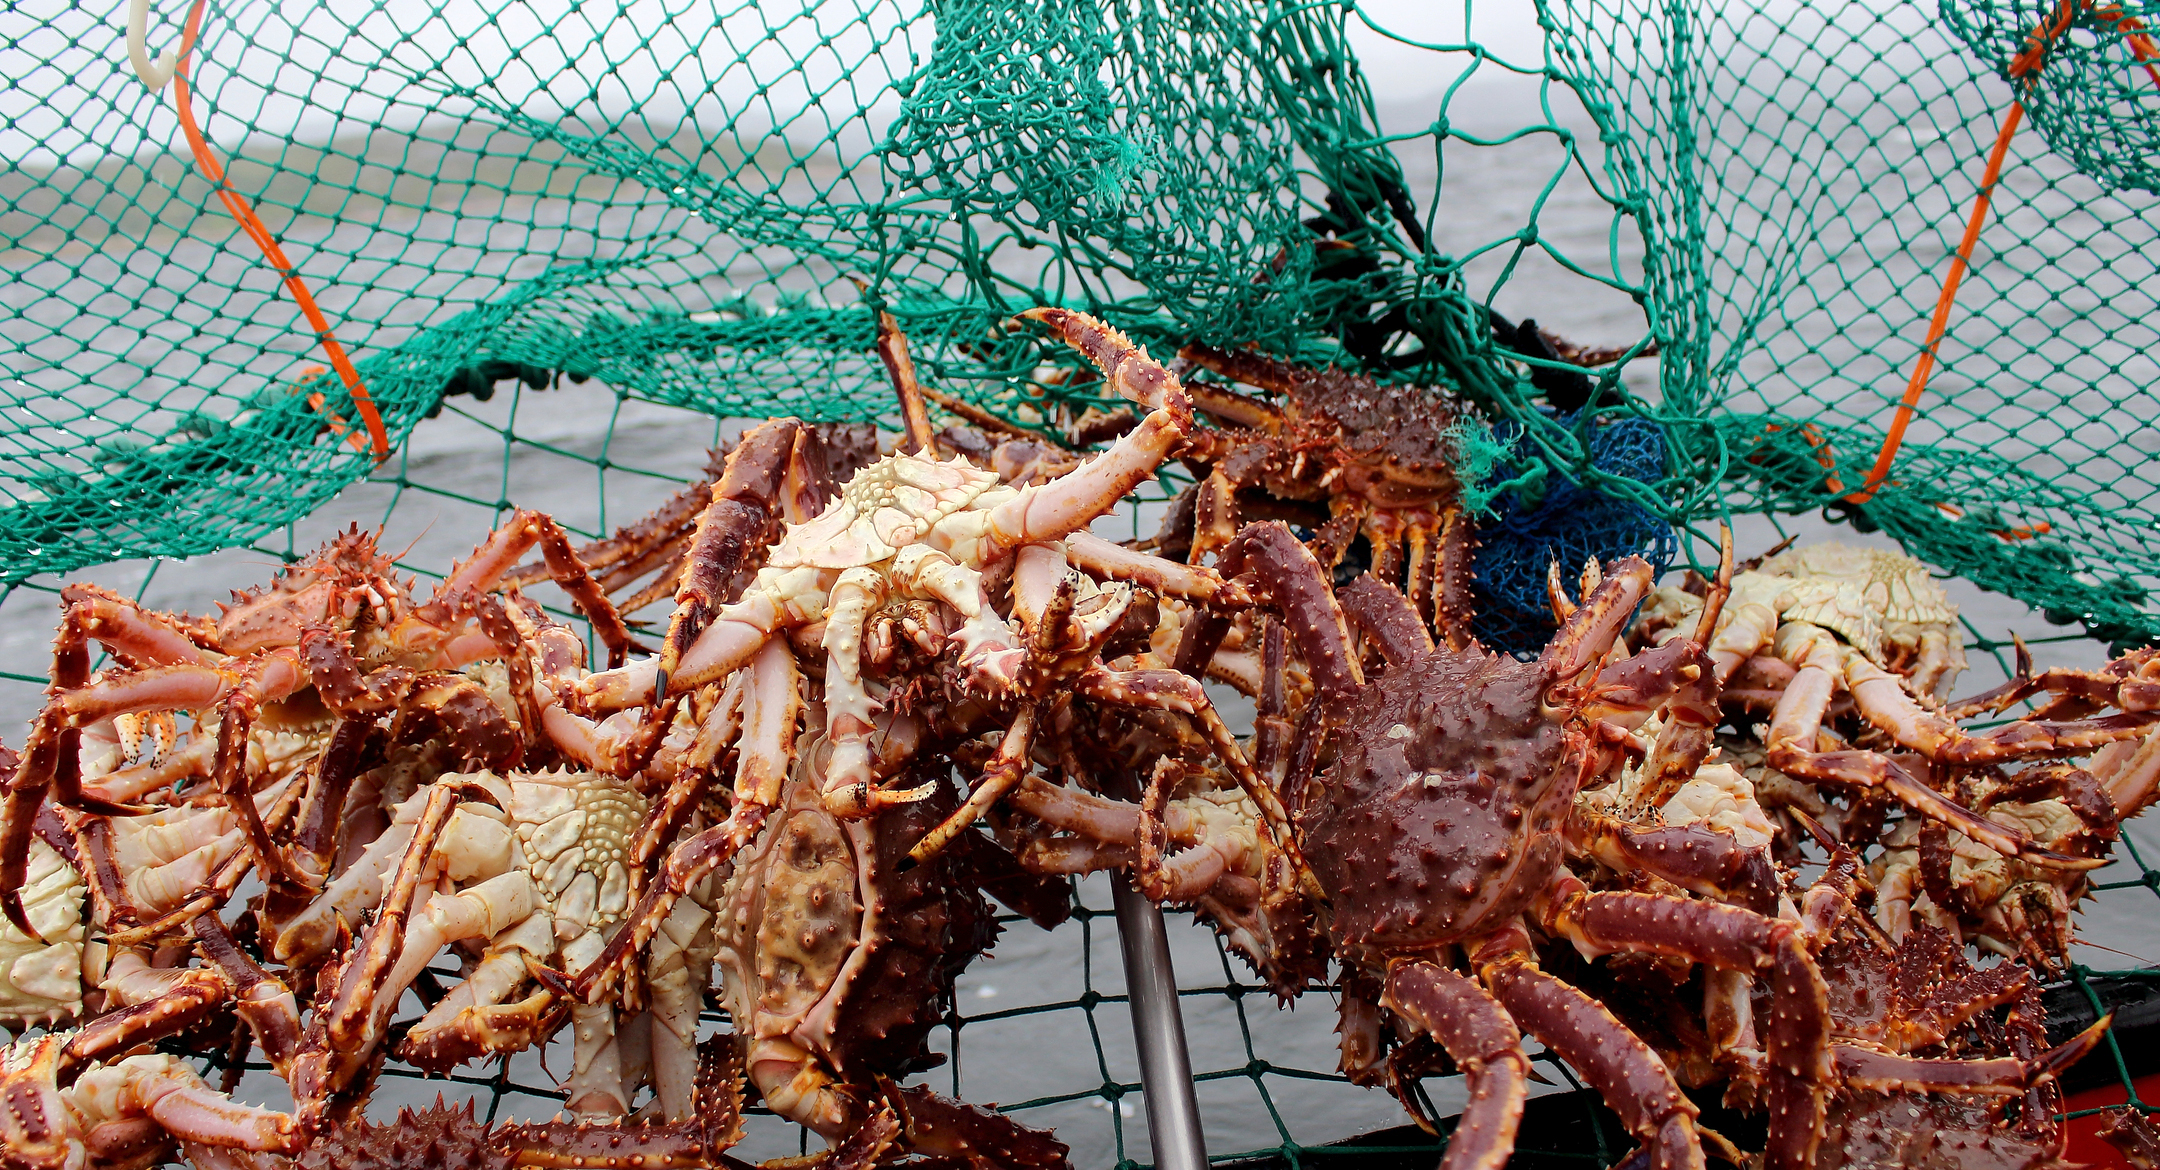 King crab monopoly has Norwegian fishers in gold rush - Undercurrent News